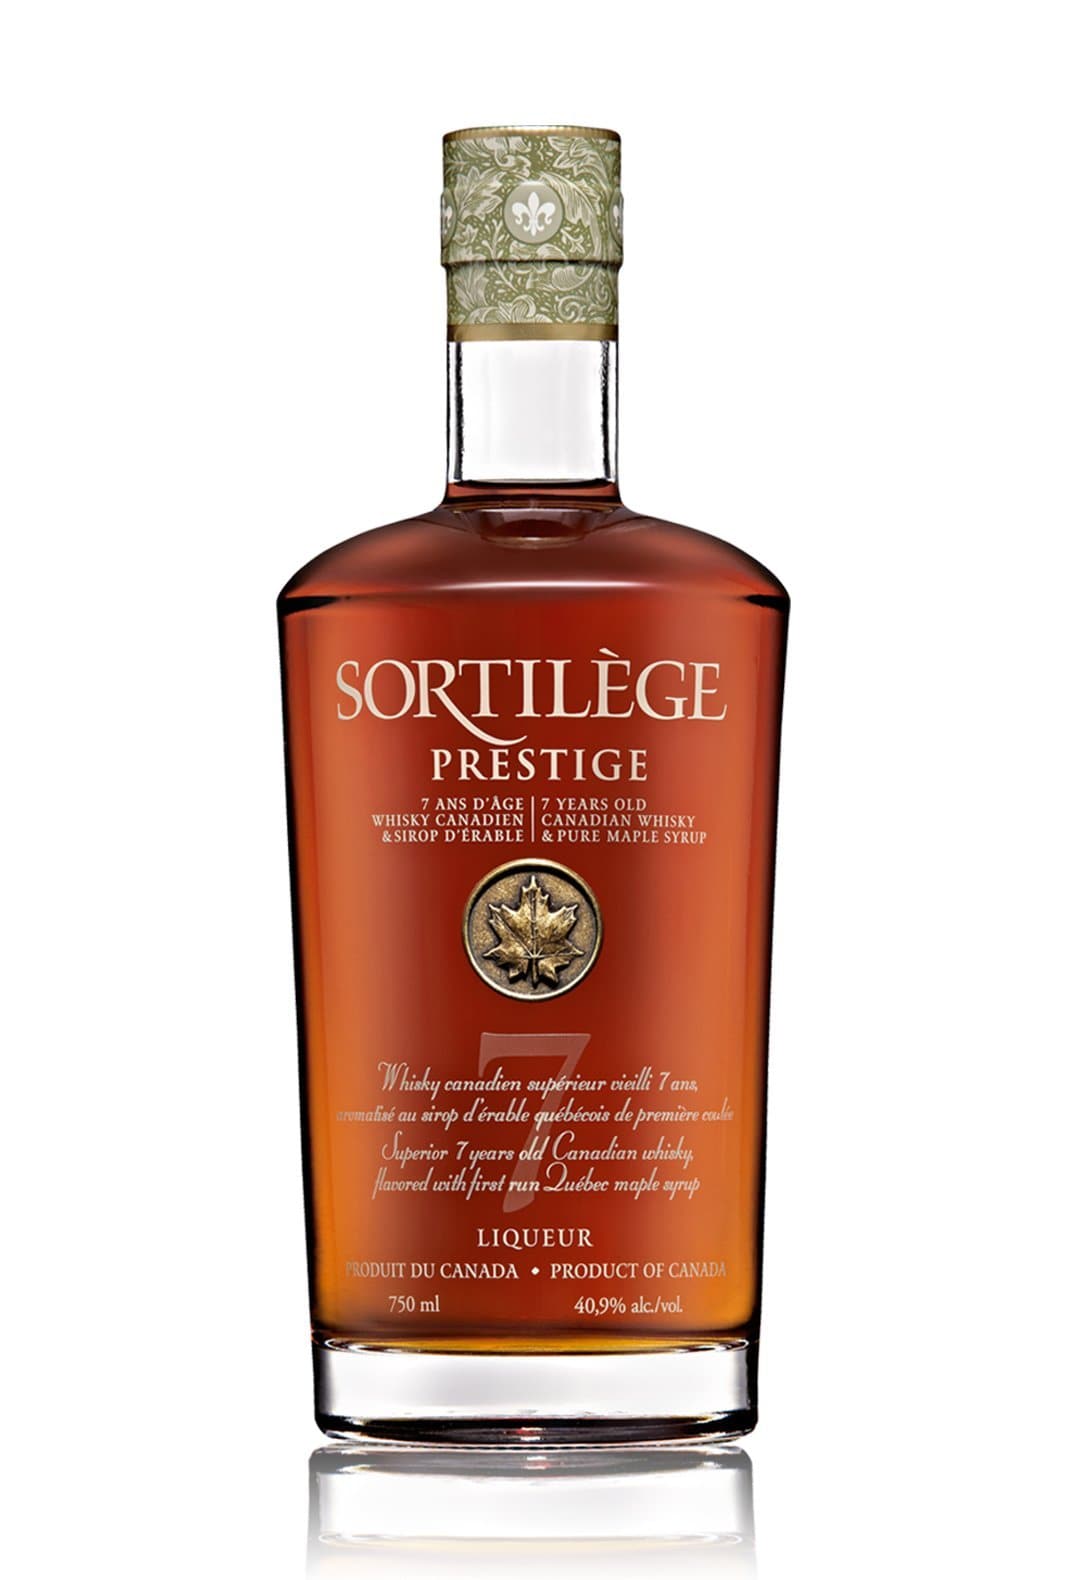 Sortilege Prestige Whisky 40.9% 750ml | Whiskey | Shop online at Spirits of France